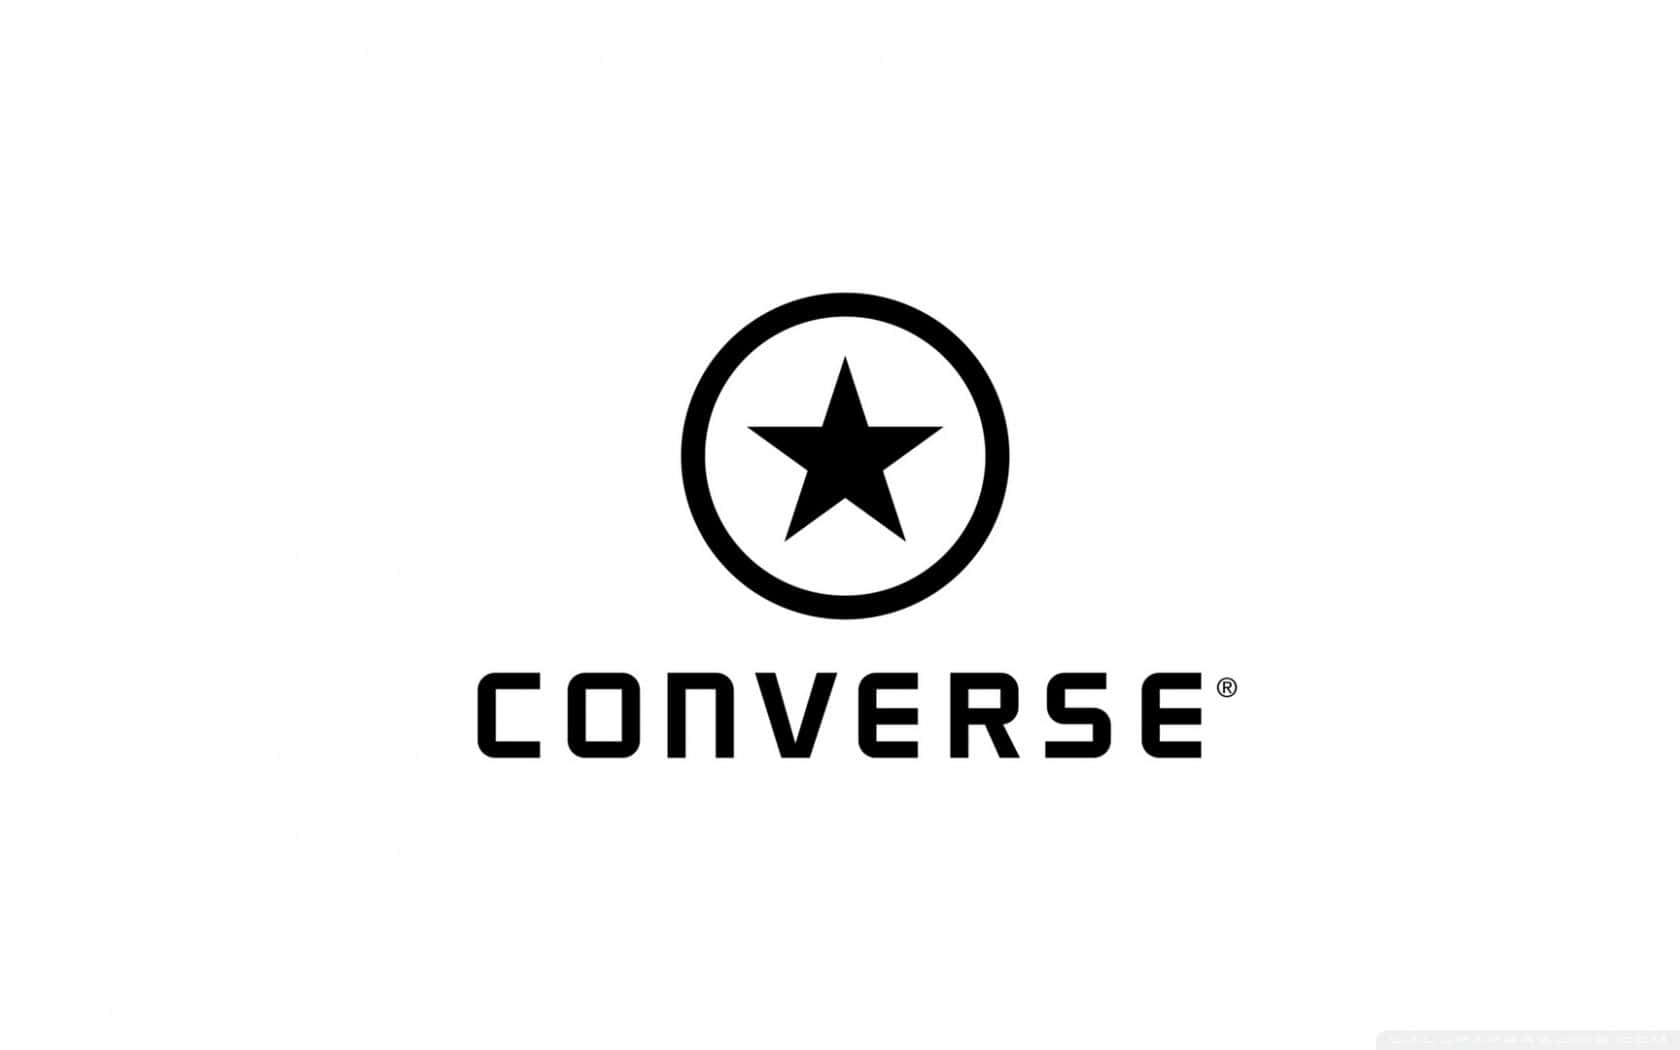 Fundocom O Logo Da Converse.